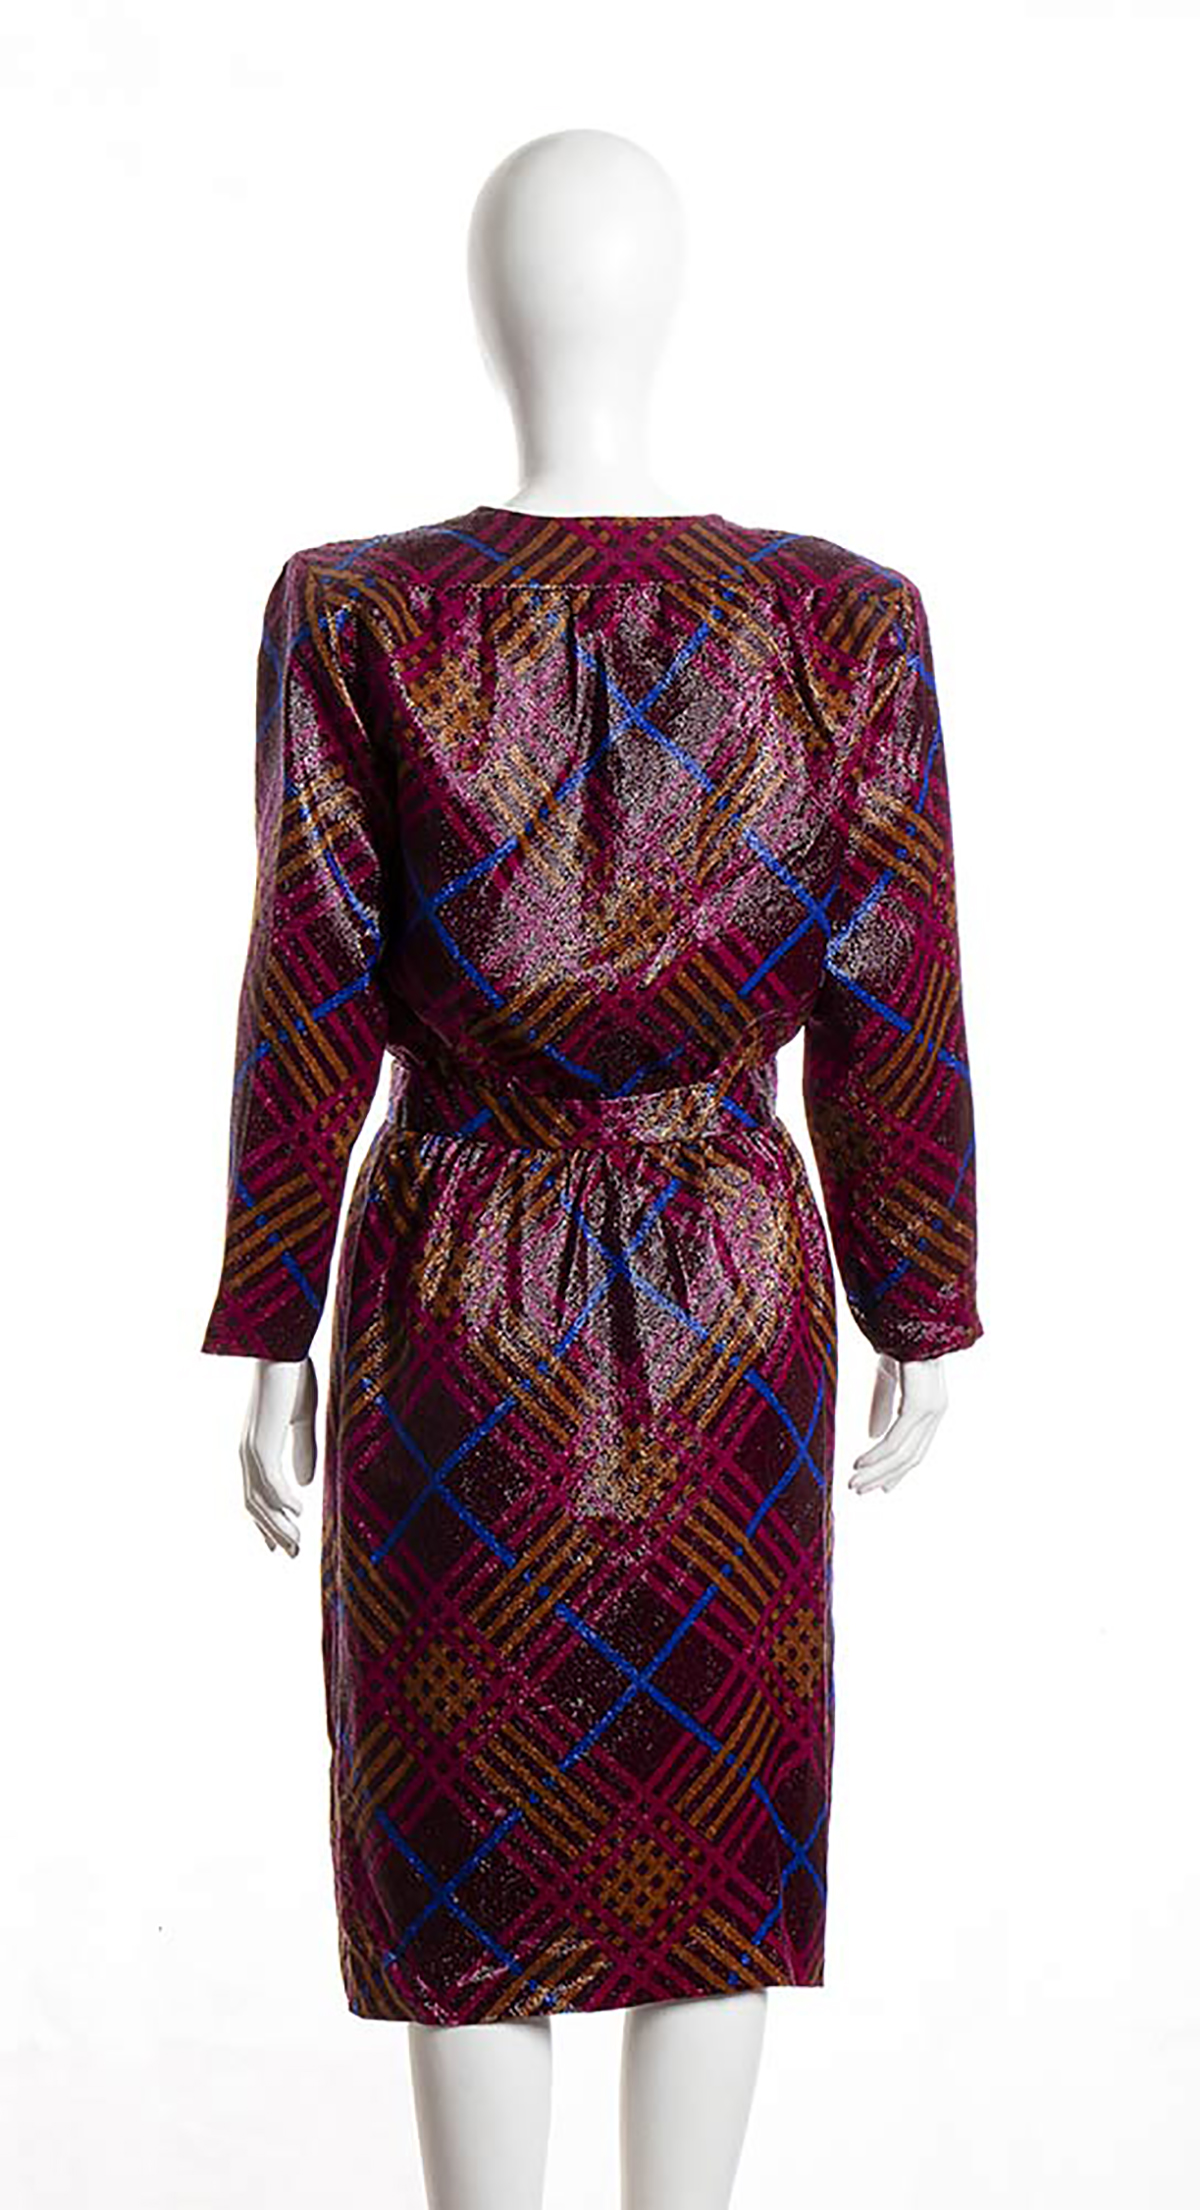 SAINT LAURENT RIVE GAUCHE DRESS 80s Polyester blend lurex tartan pattern dress, General conditions - Image 3 of 4